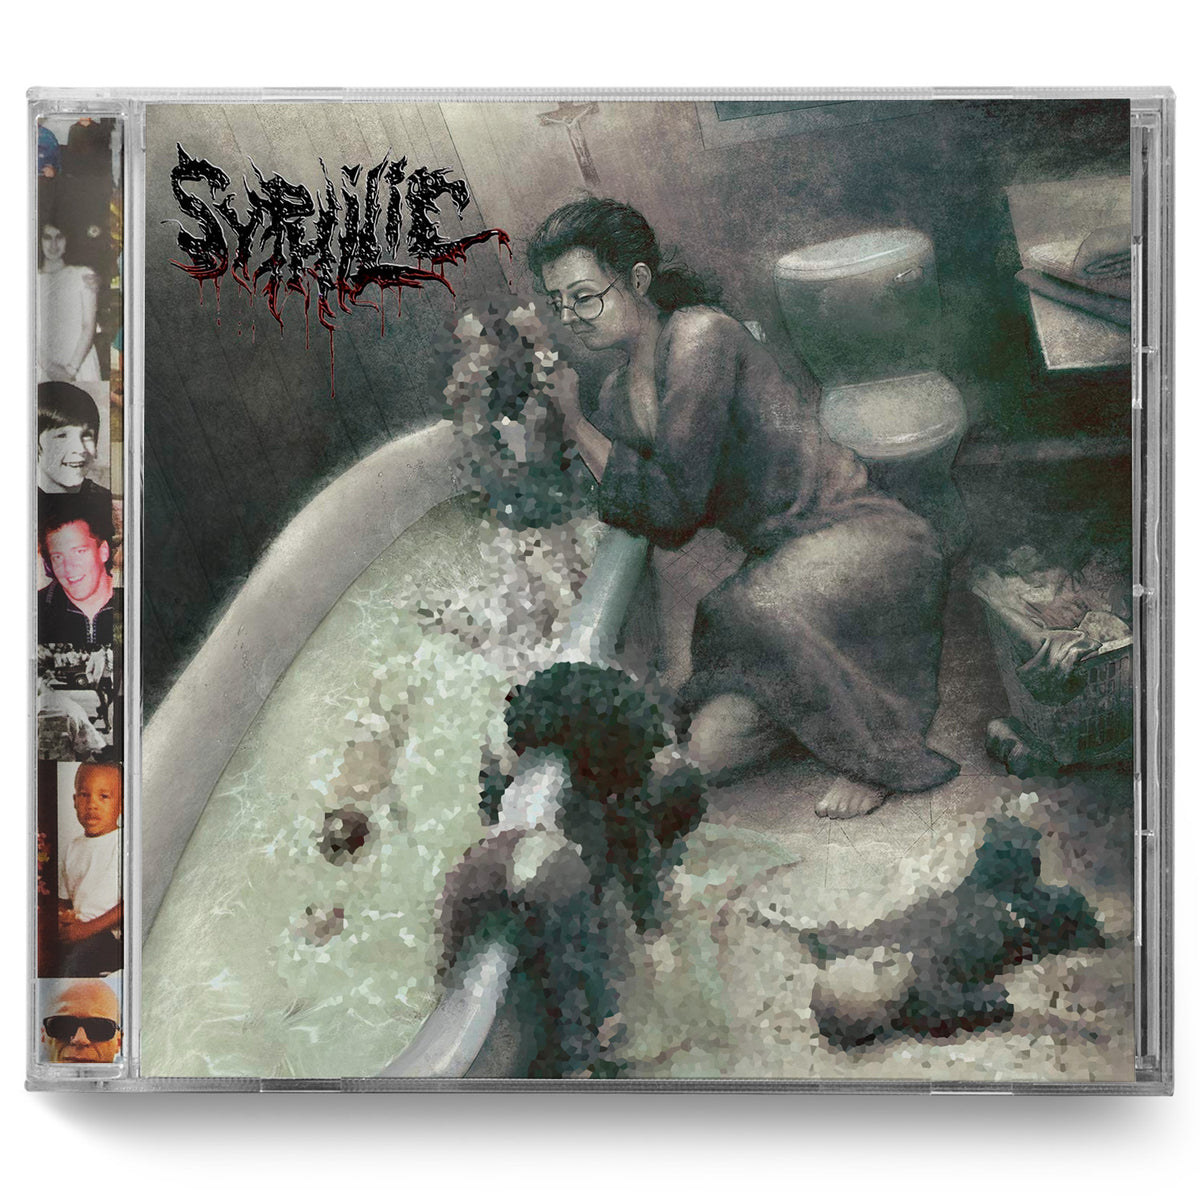 Syphilic "Empty Nest" CD - Miasma Records